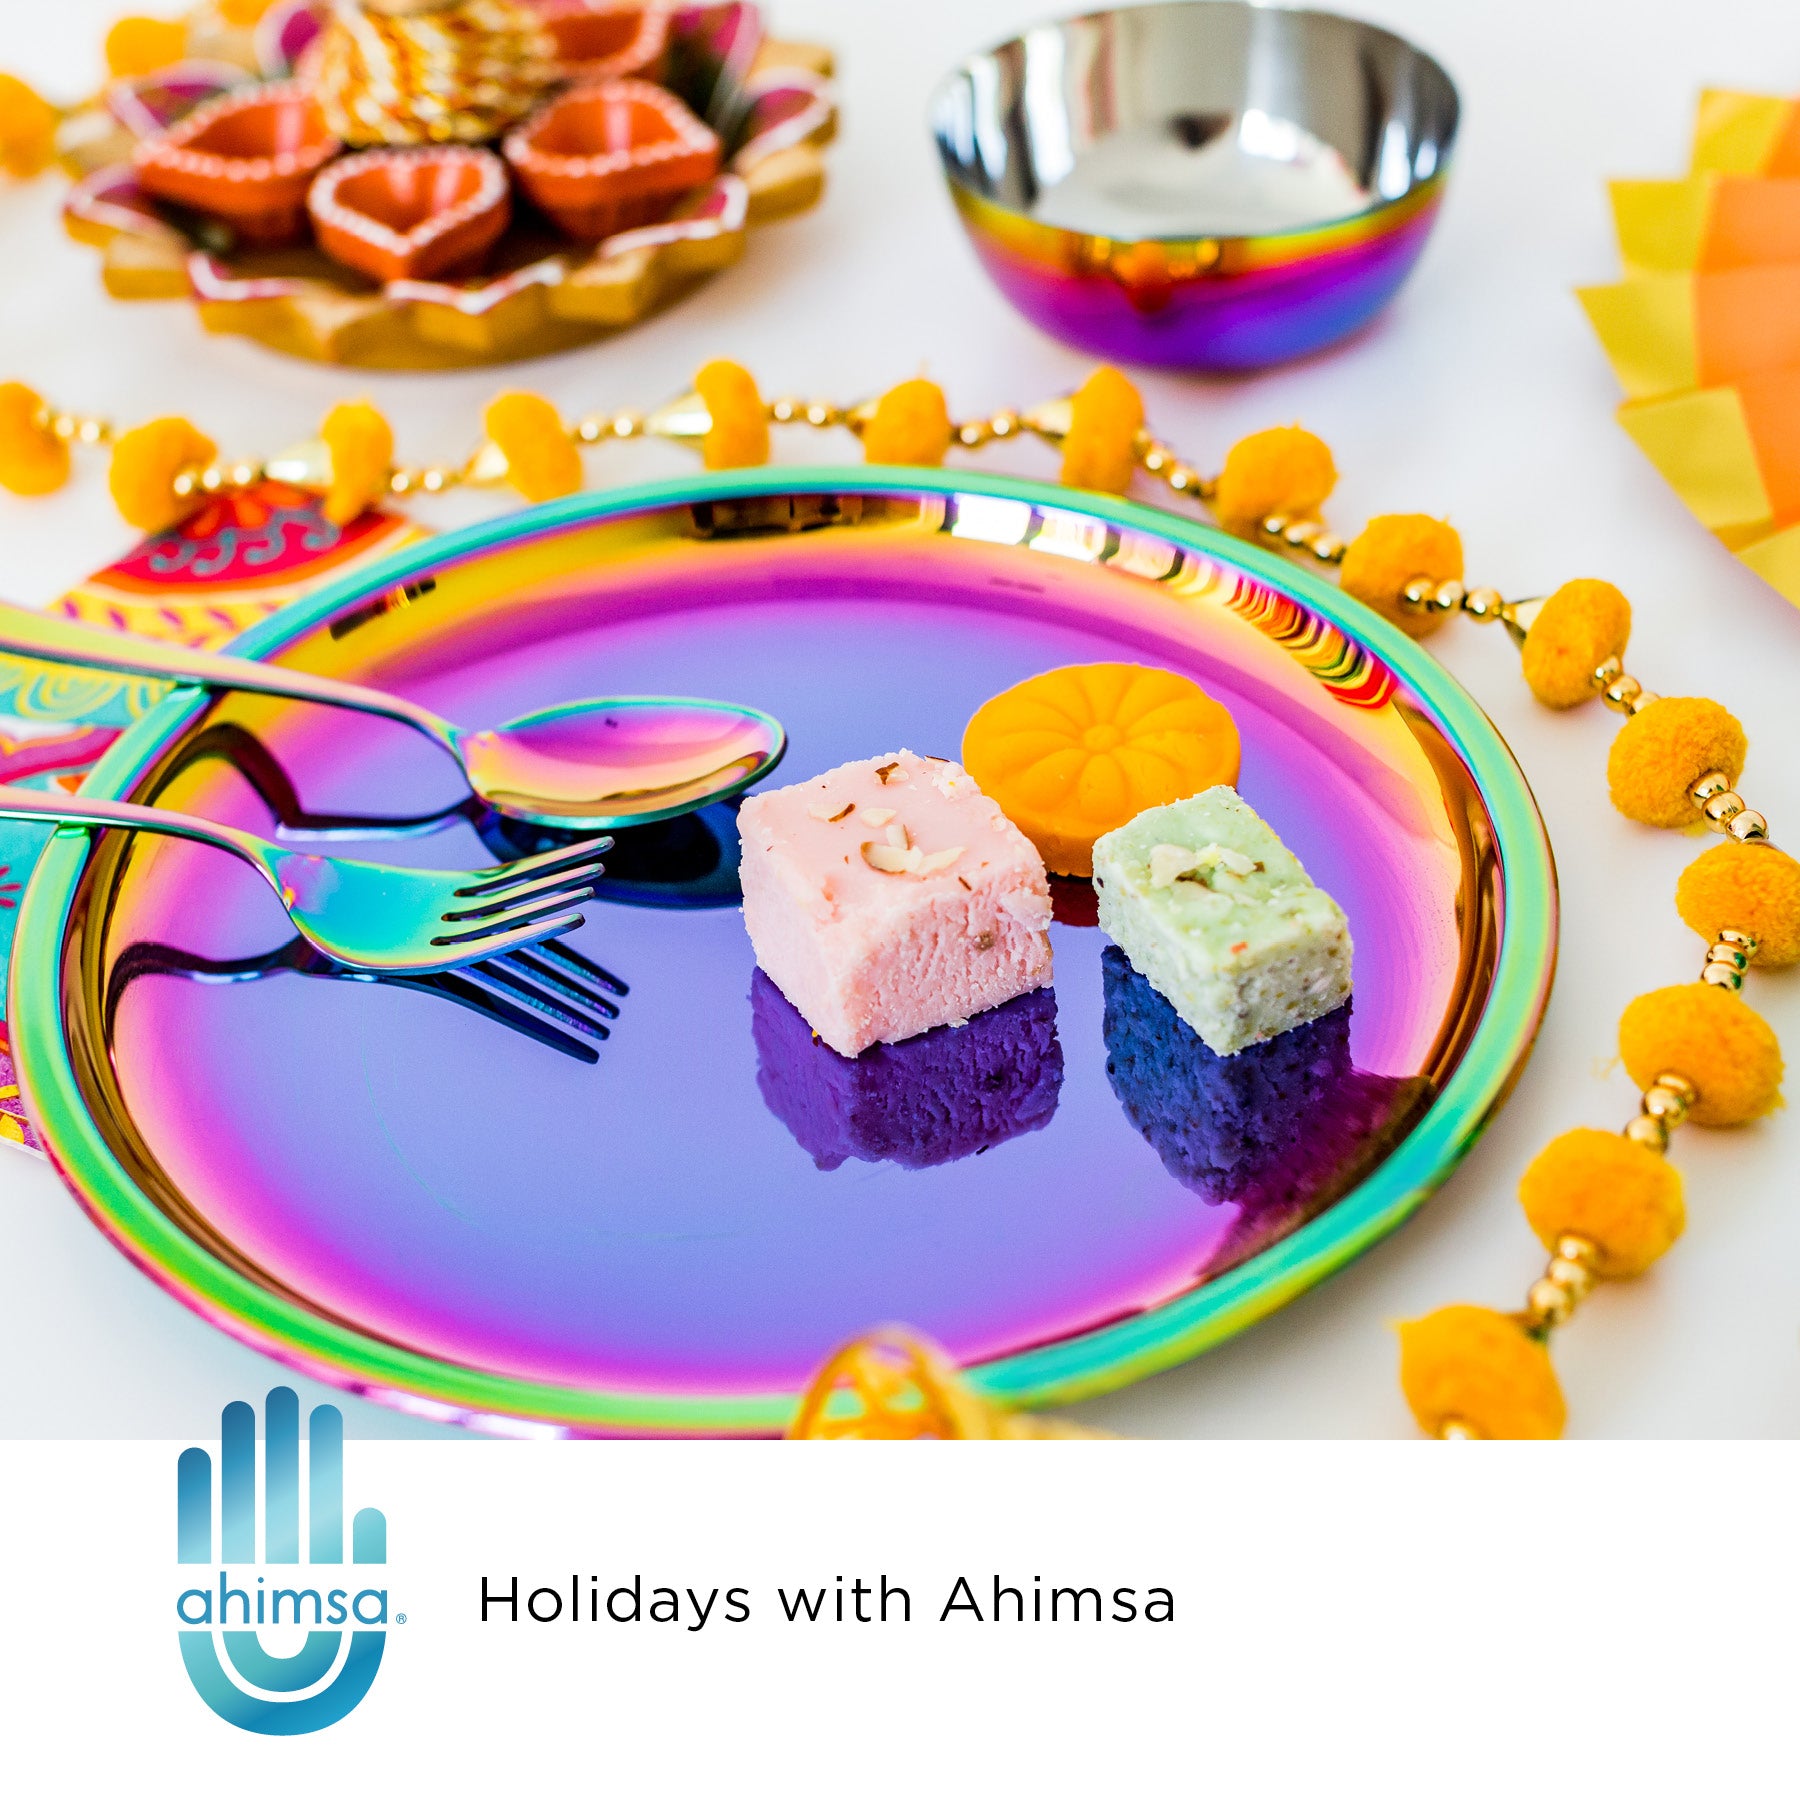 Holidays with Ahimsa - celebrating diversity through mealtime